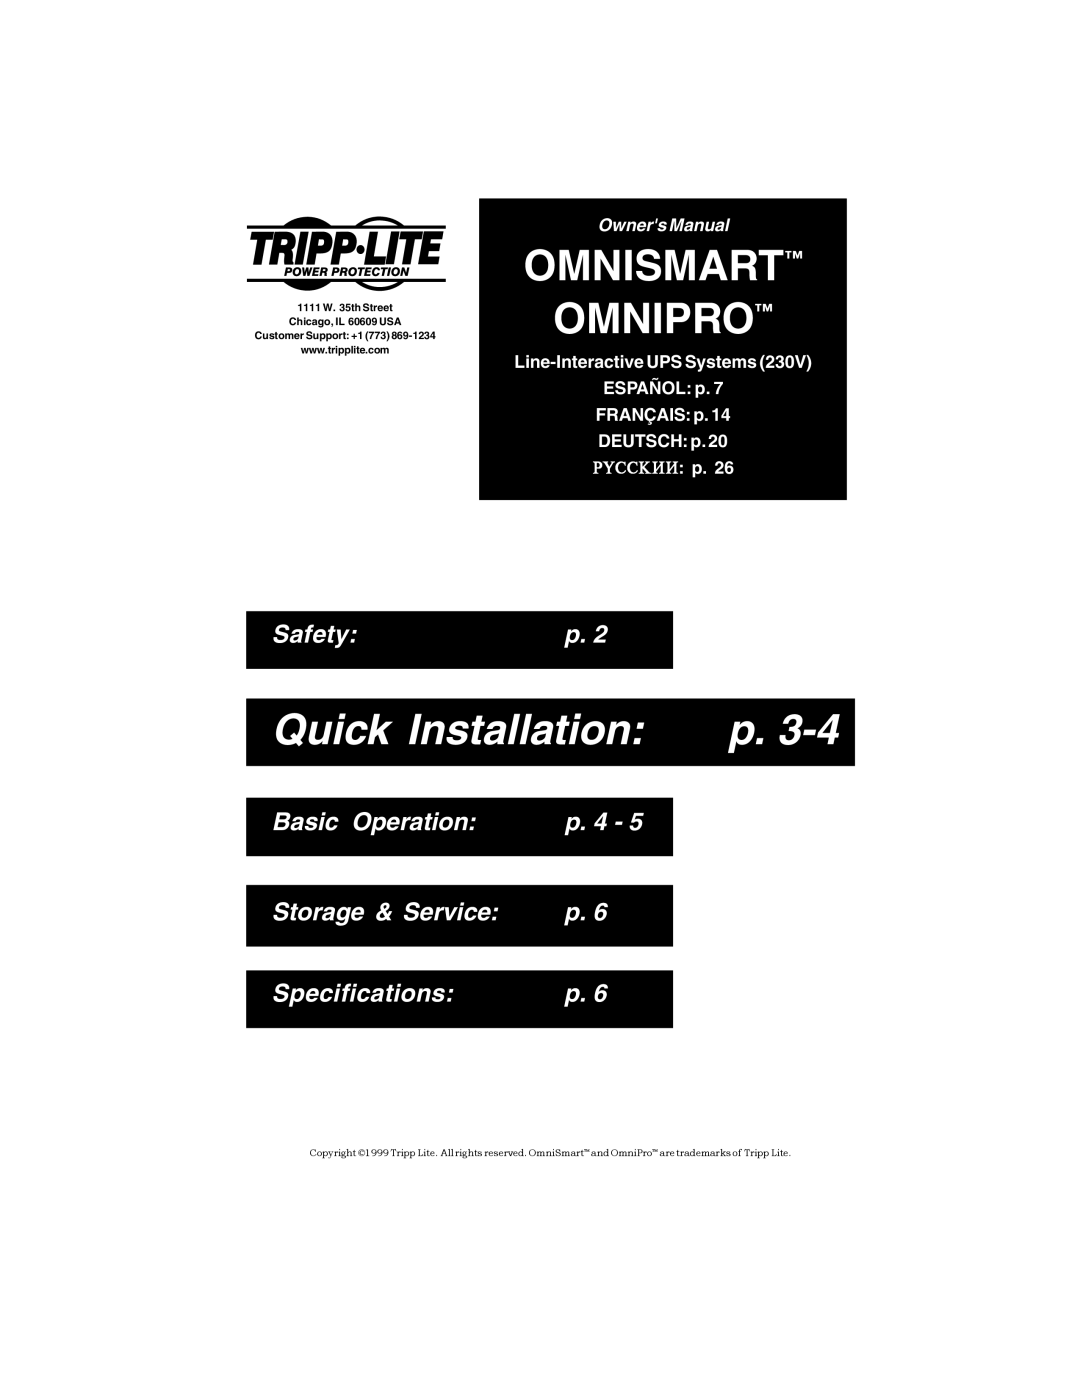 Tripp Lite OMNIPRO owner manual Omnismart Omnipro, Quick Installation p, Safety, Basic Operation, p. 4, Storage & Service 